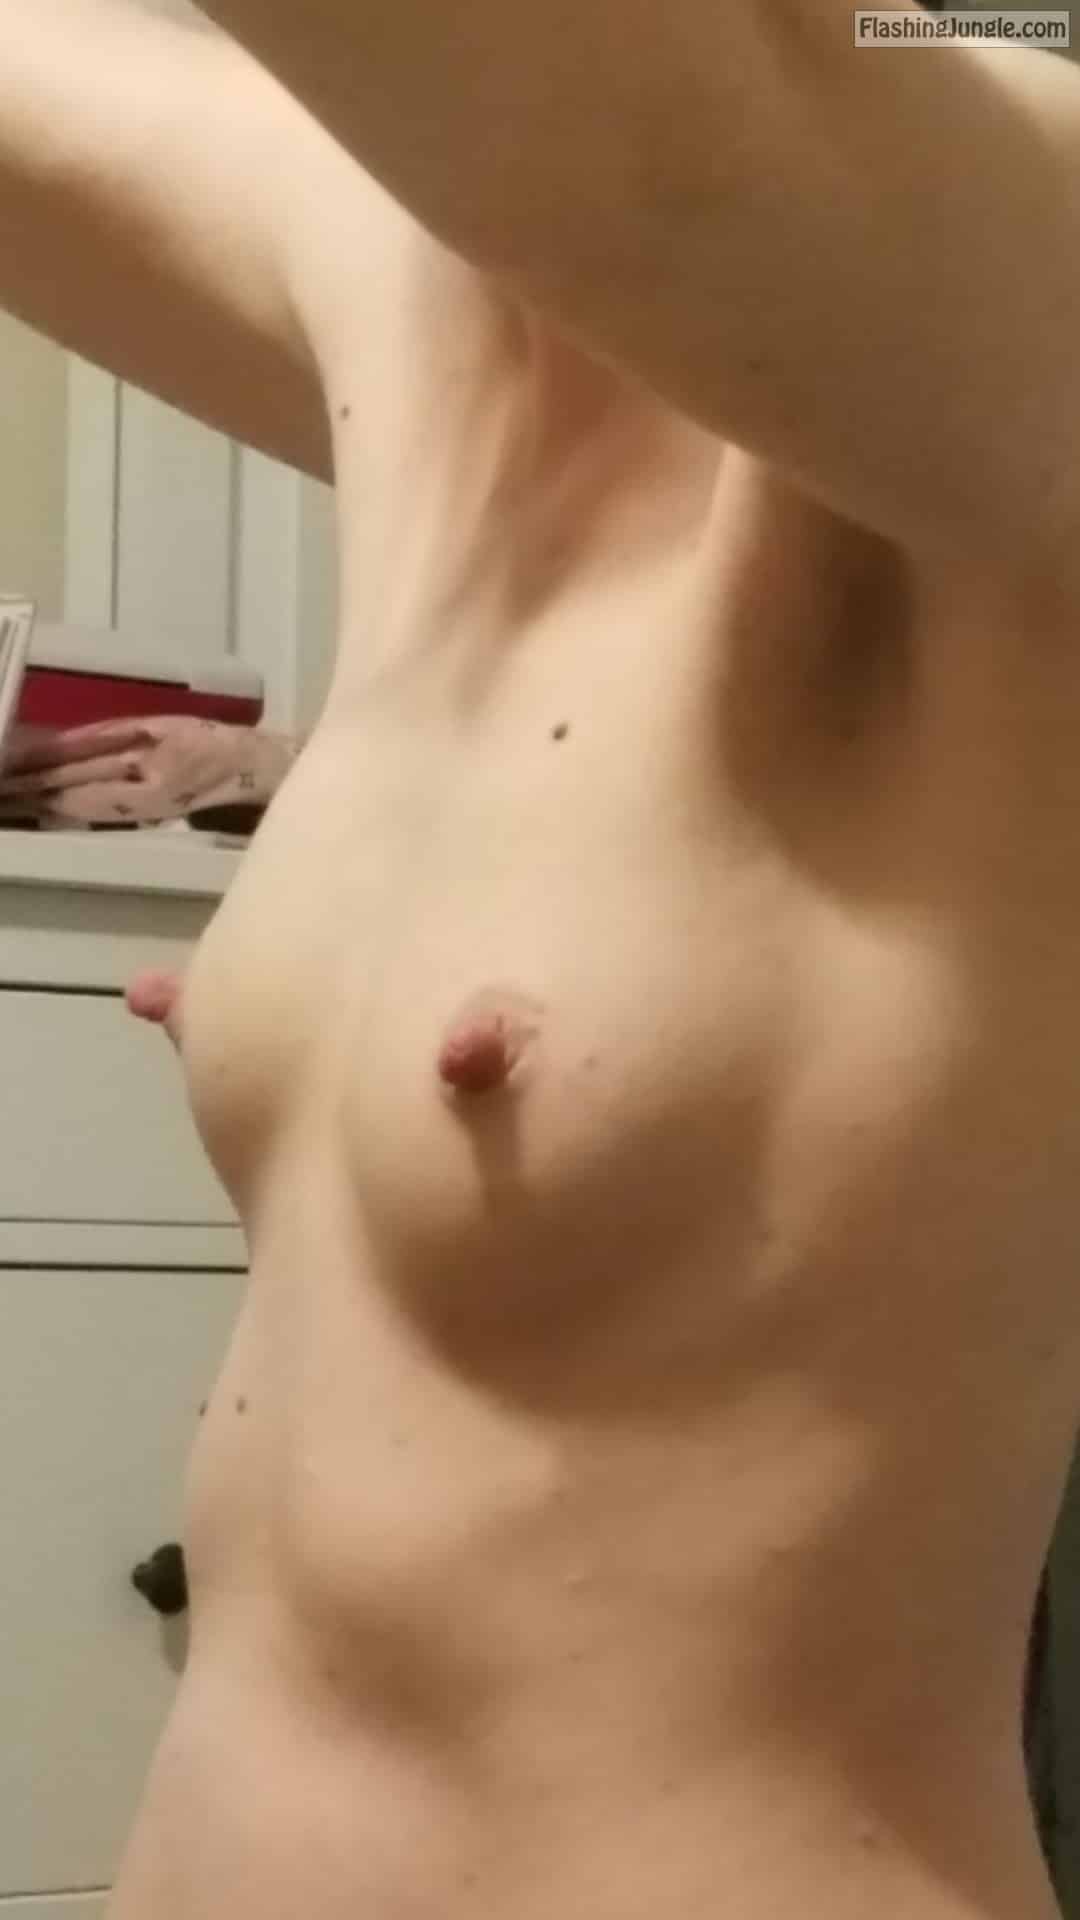 Real Amateurs Boobs Flash Pics - Small tits hard nipples